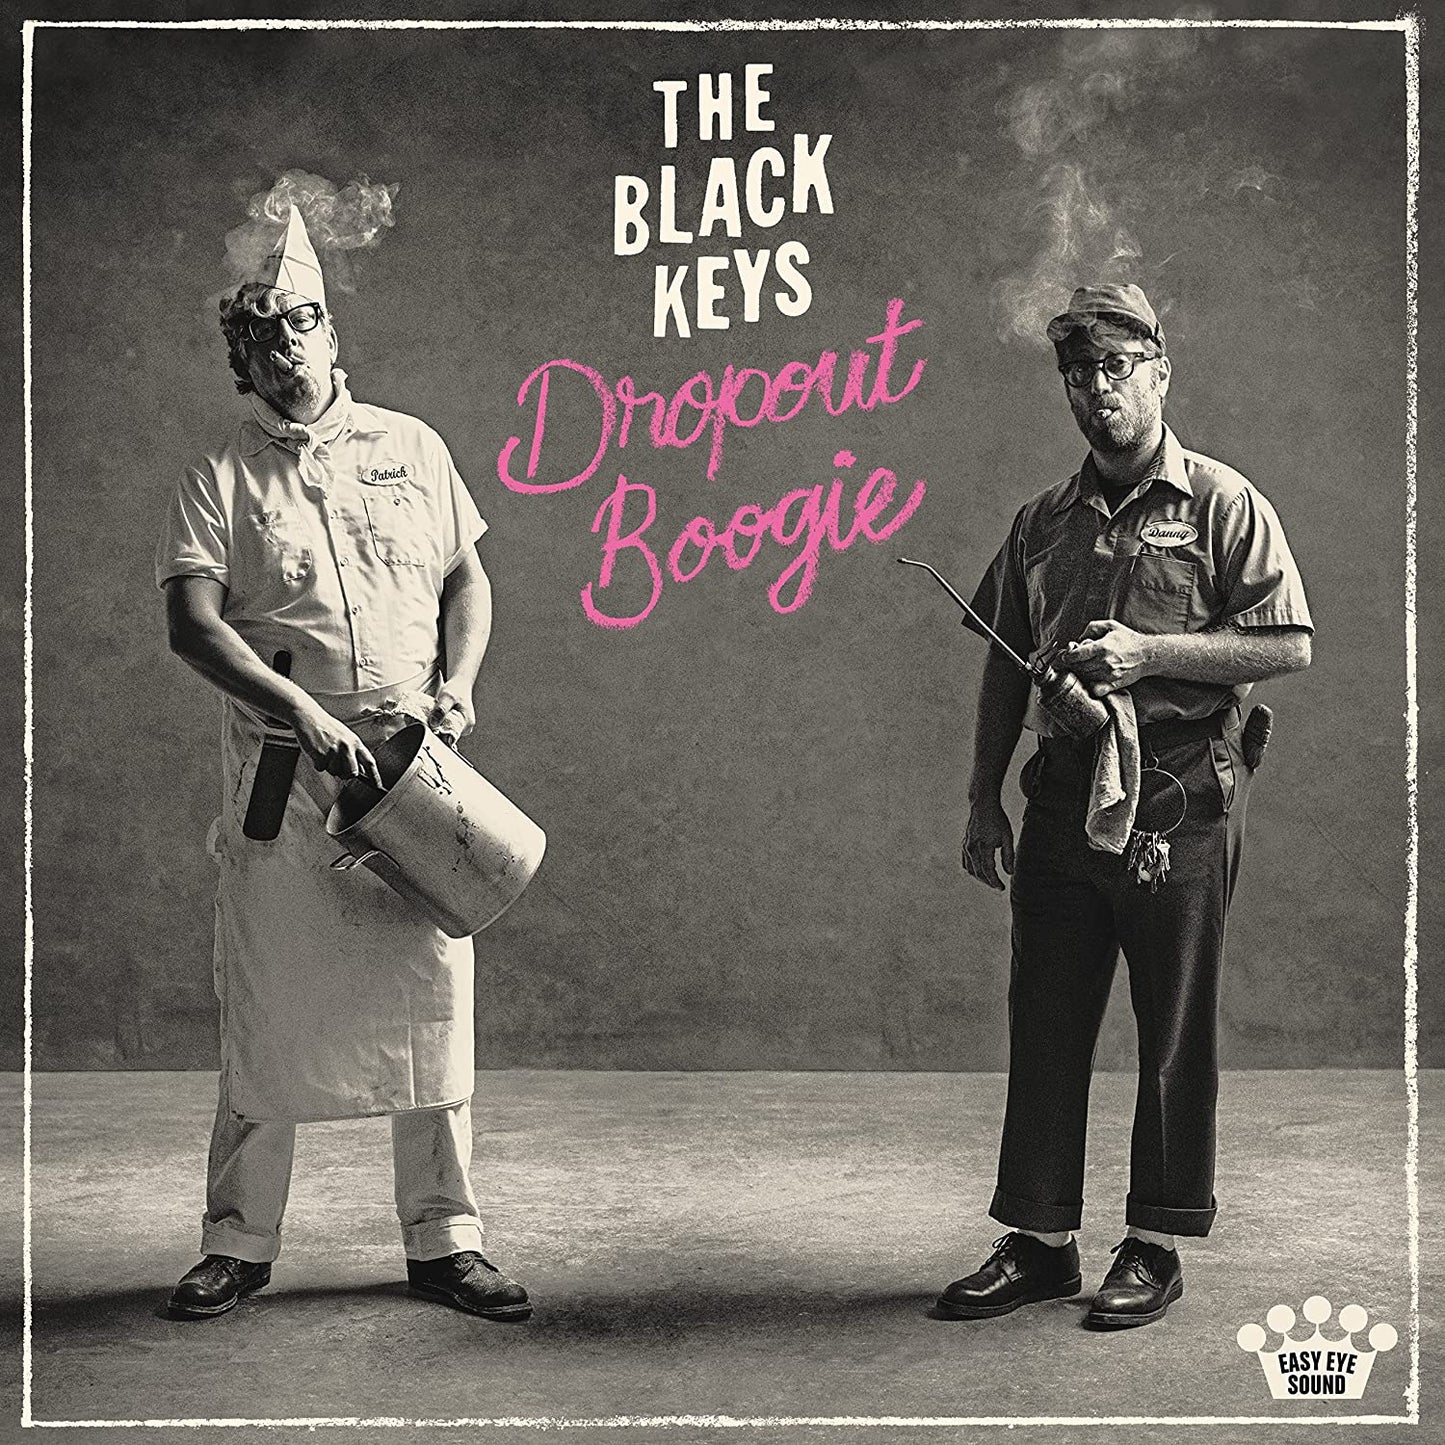 The Black Keys - Dropout Boogie - LP (White)